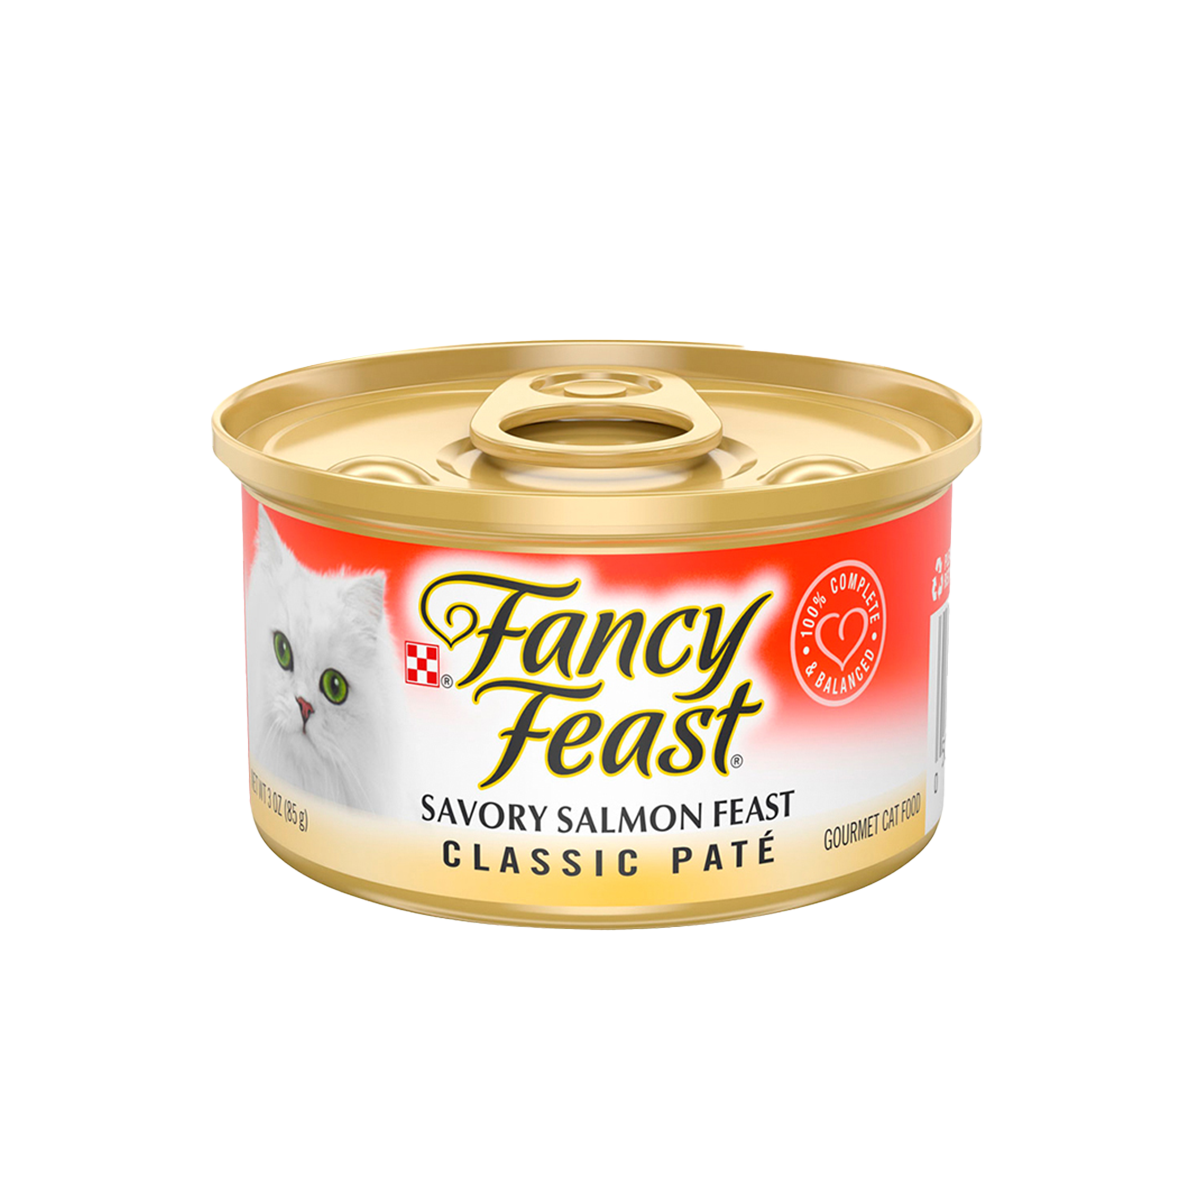 Fancy-Feast-Savory-Salmon-Feast-Classic-Pate%CC%81-01.png